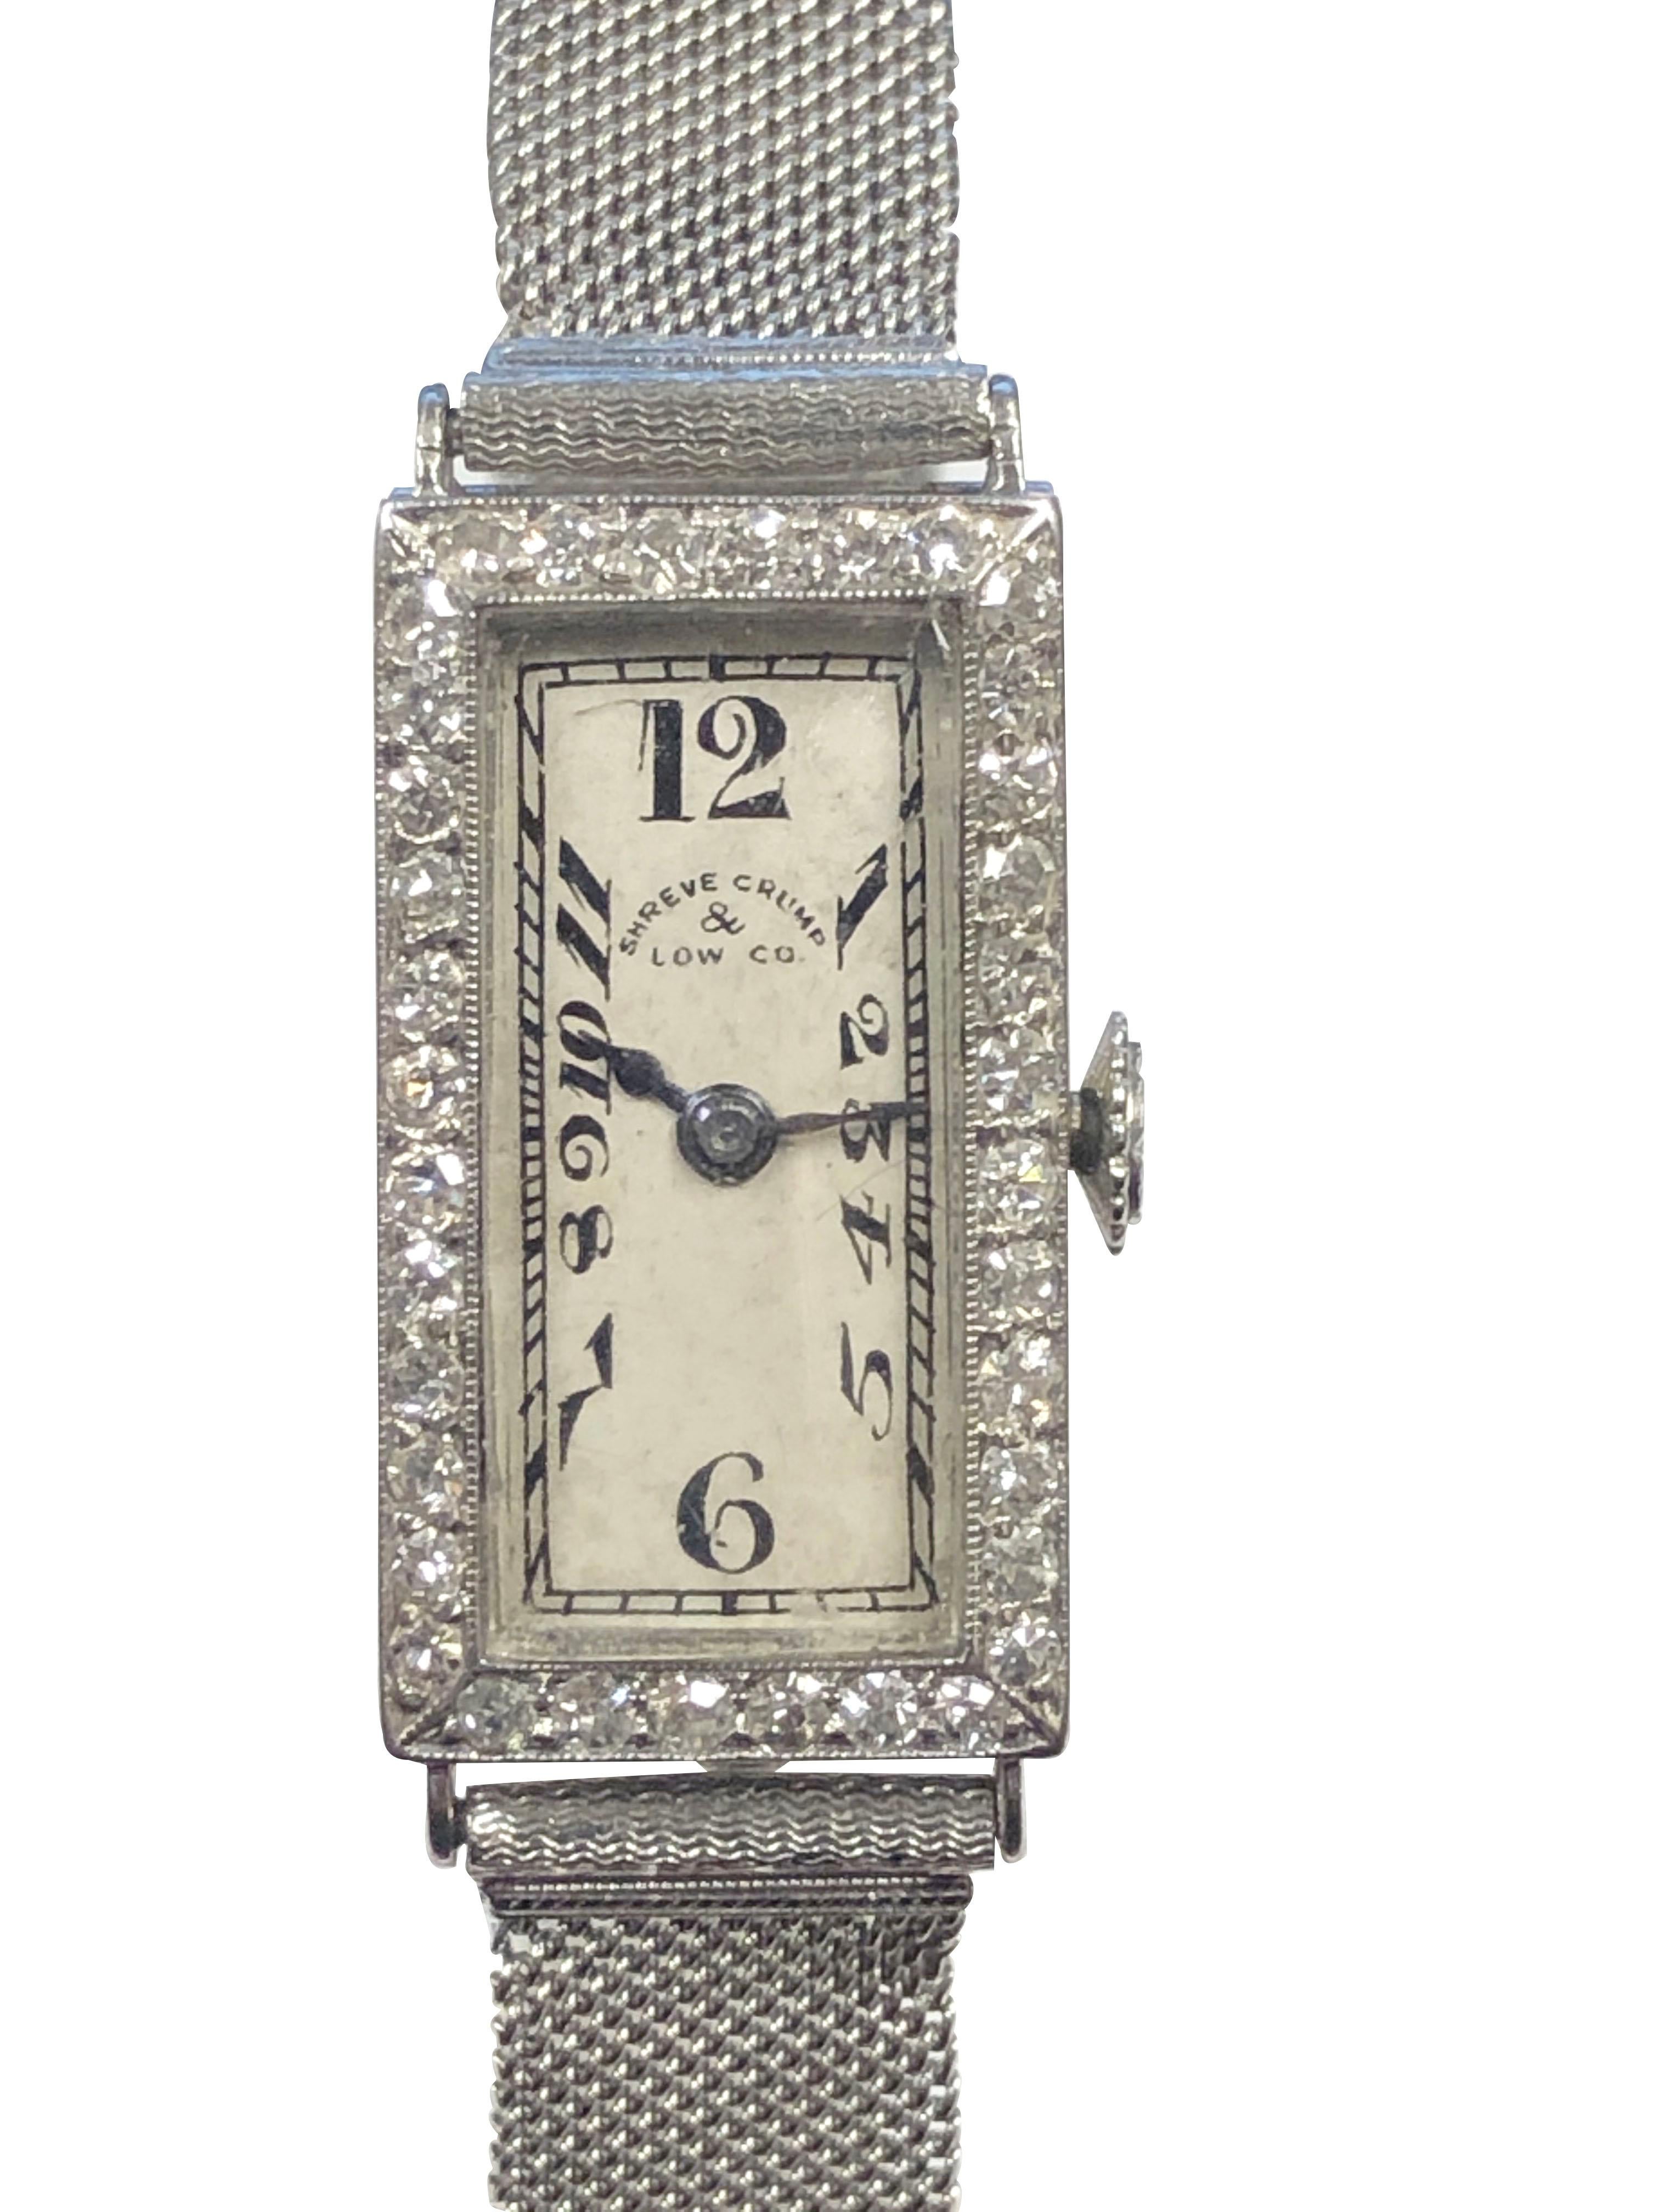 Art Deco Patek Philippe for Shreve Crump & Low Platinum Diamond 1920s Ladies Wrist Watch For Sale